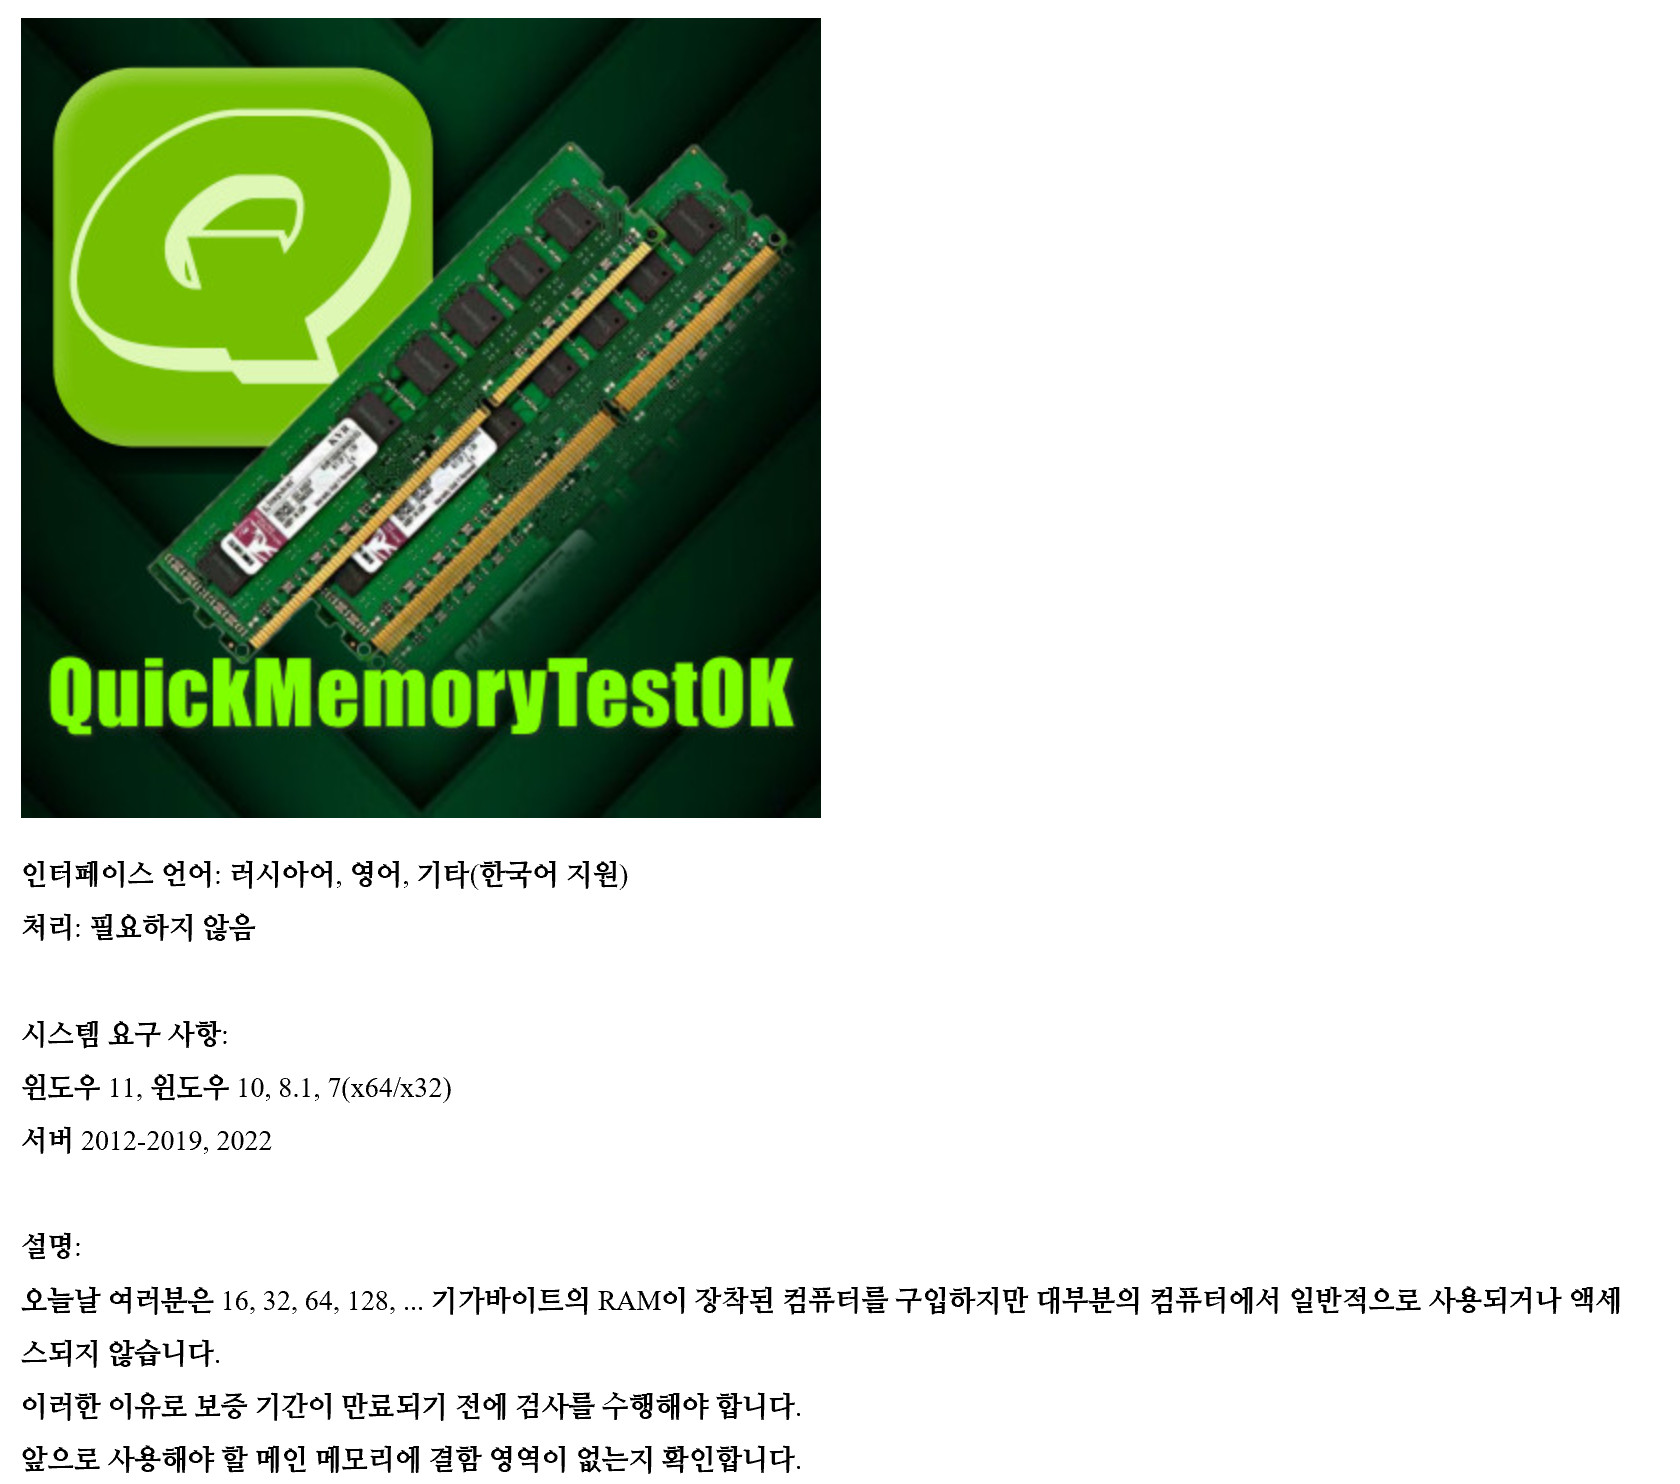 QuickMemoryTestOK 4.68 for iphone download